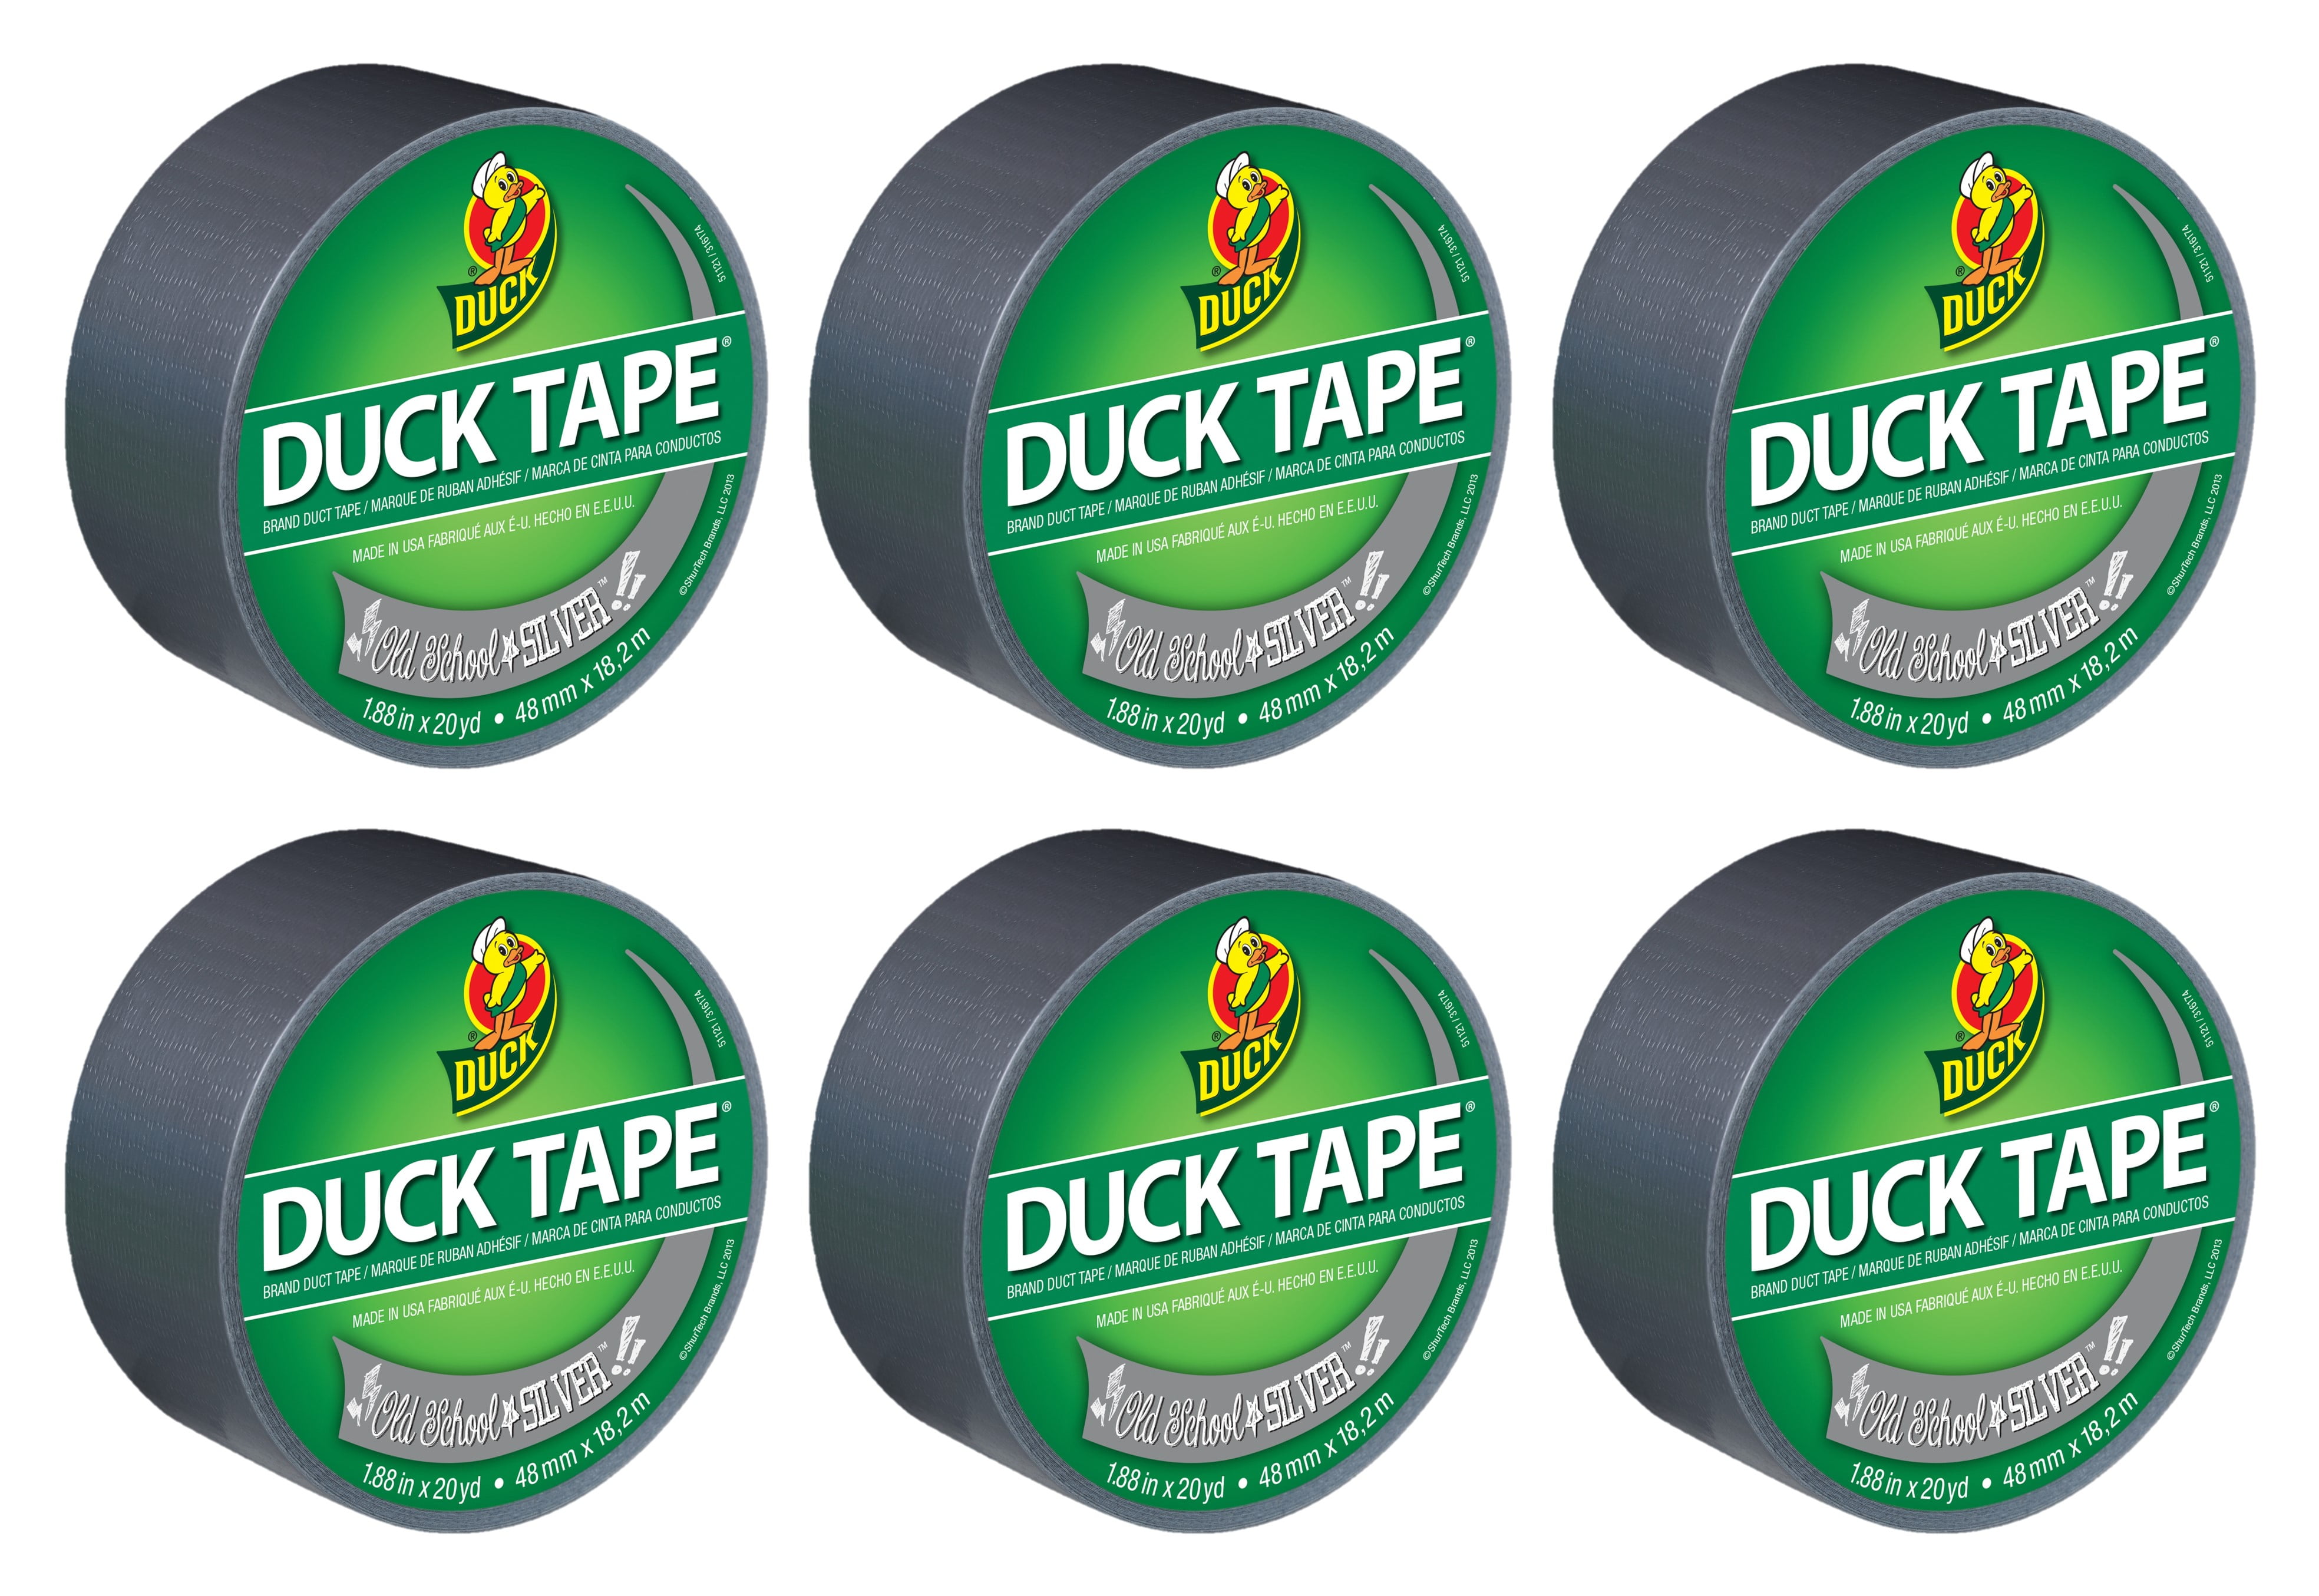 Color Duck Tape® Brand Duct Tape, Neon Orange